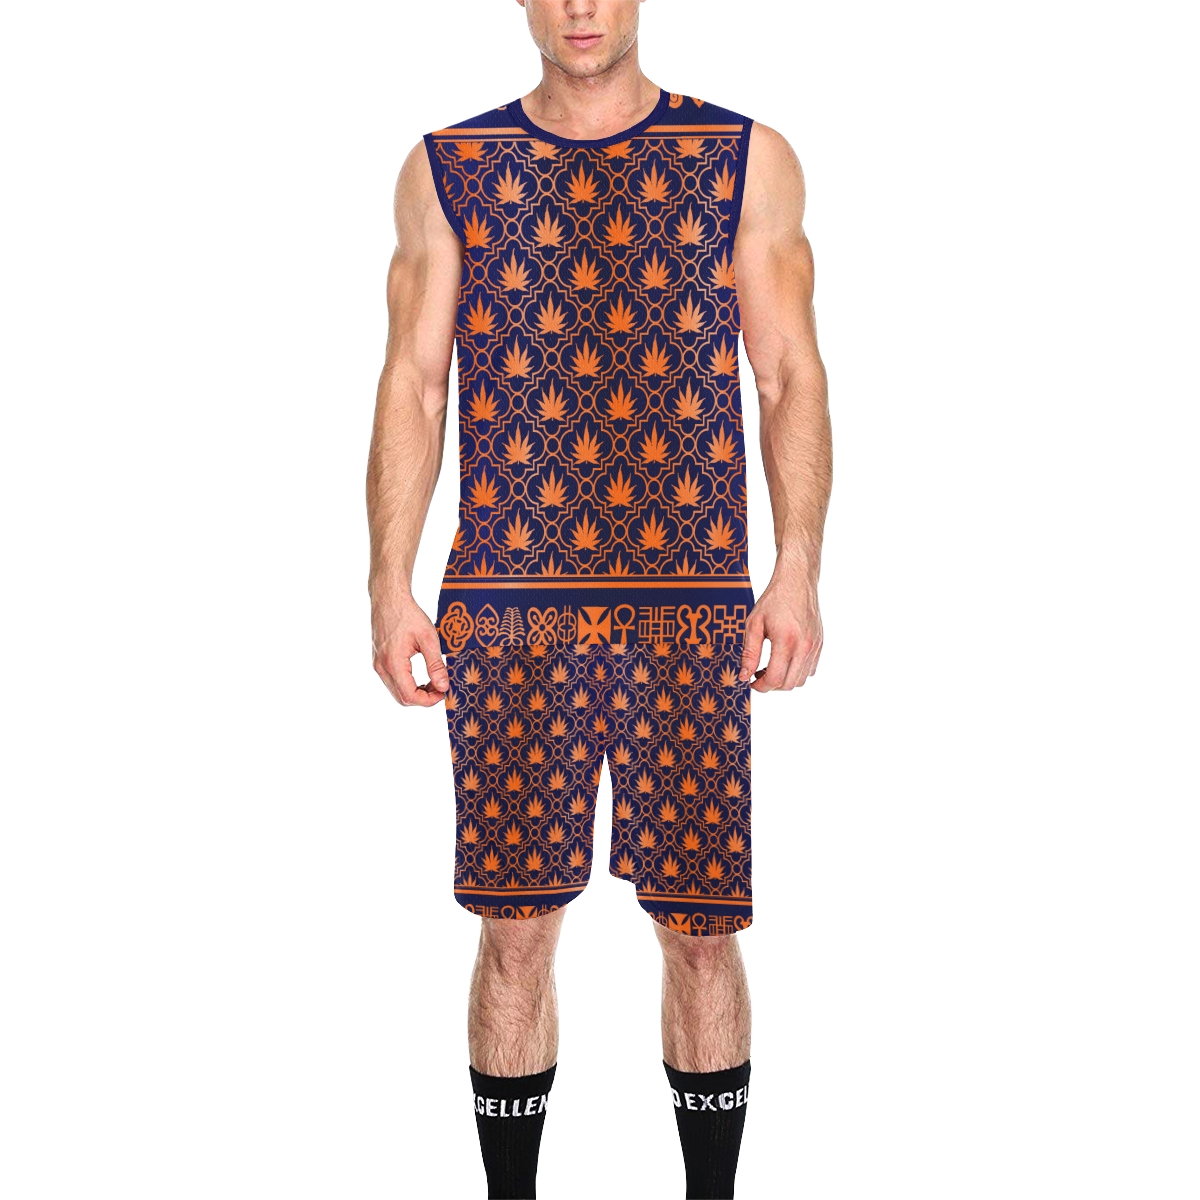 ADRINKRA ORANGE LEAF All Over Print Basketball Uniform